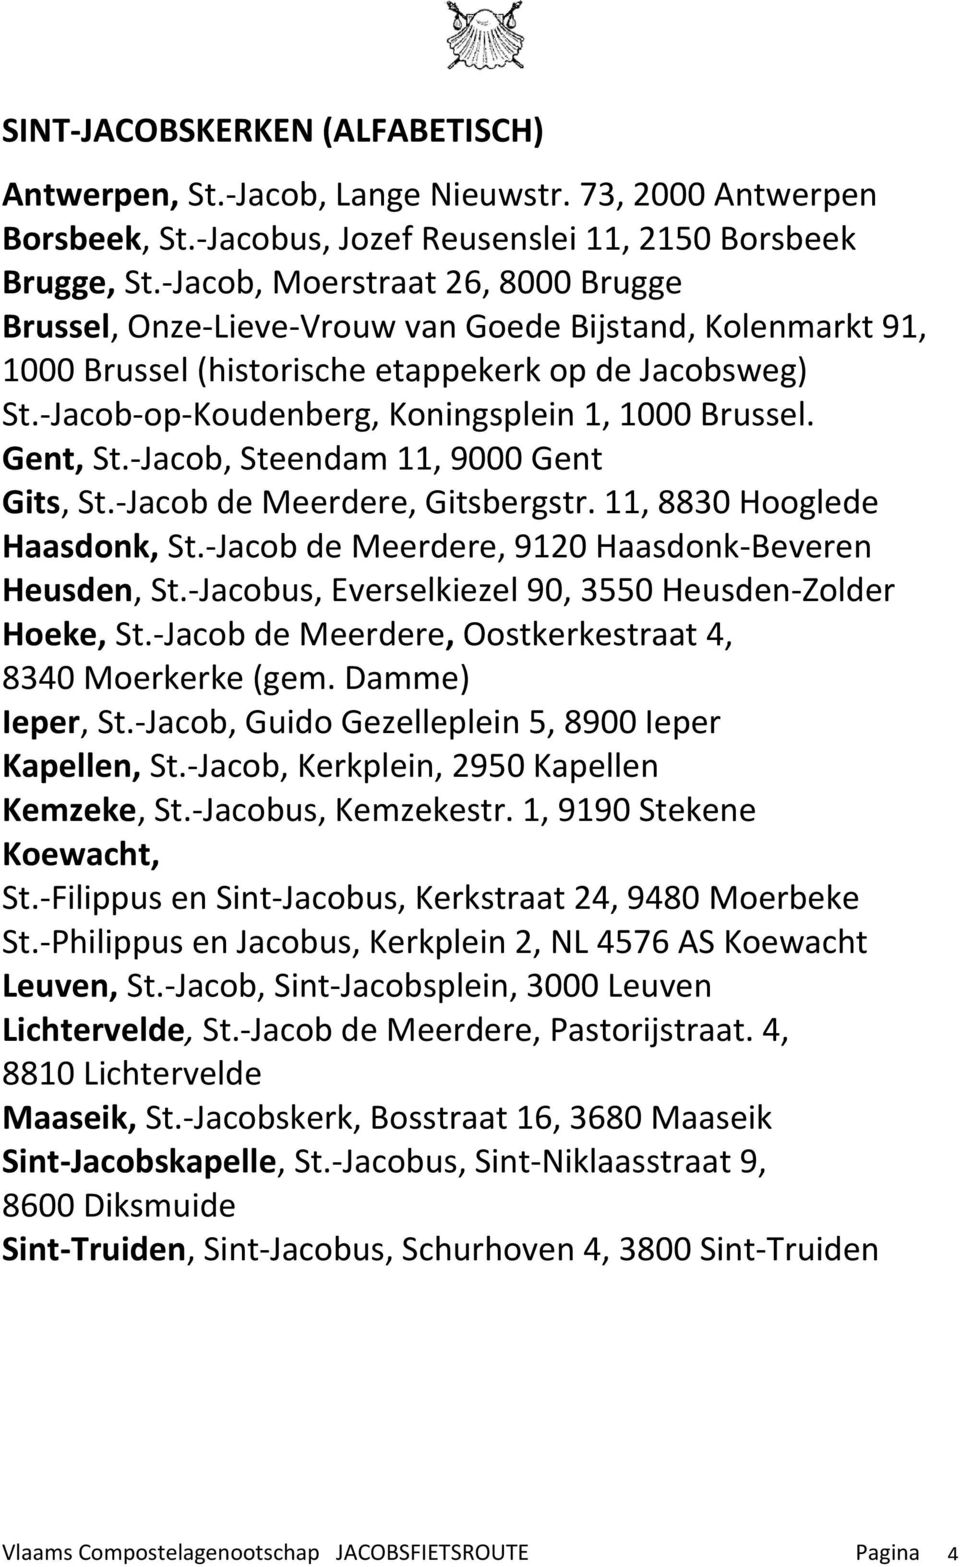 -Jacob-op-Koudenberg, Koningsplein 1, 1000 Brussel. Gent, St.-Jacob, Steendam 11, 9000 Gent Gits, St.-Jacob de Meerdere, Gitsbergstr. 11, 8830 Hooglede Haasdonk, St.